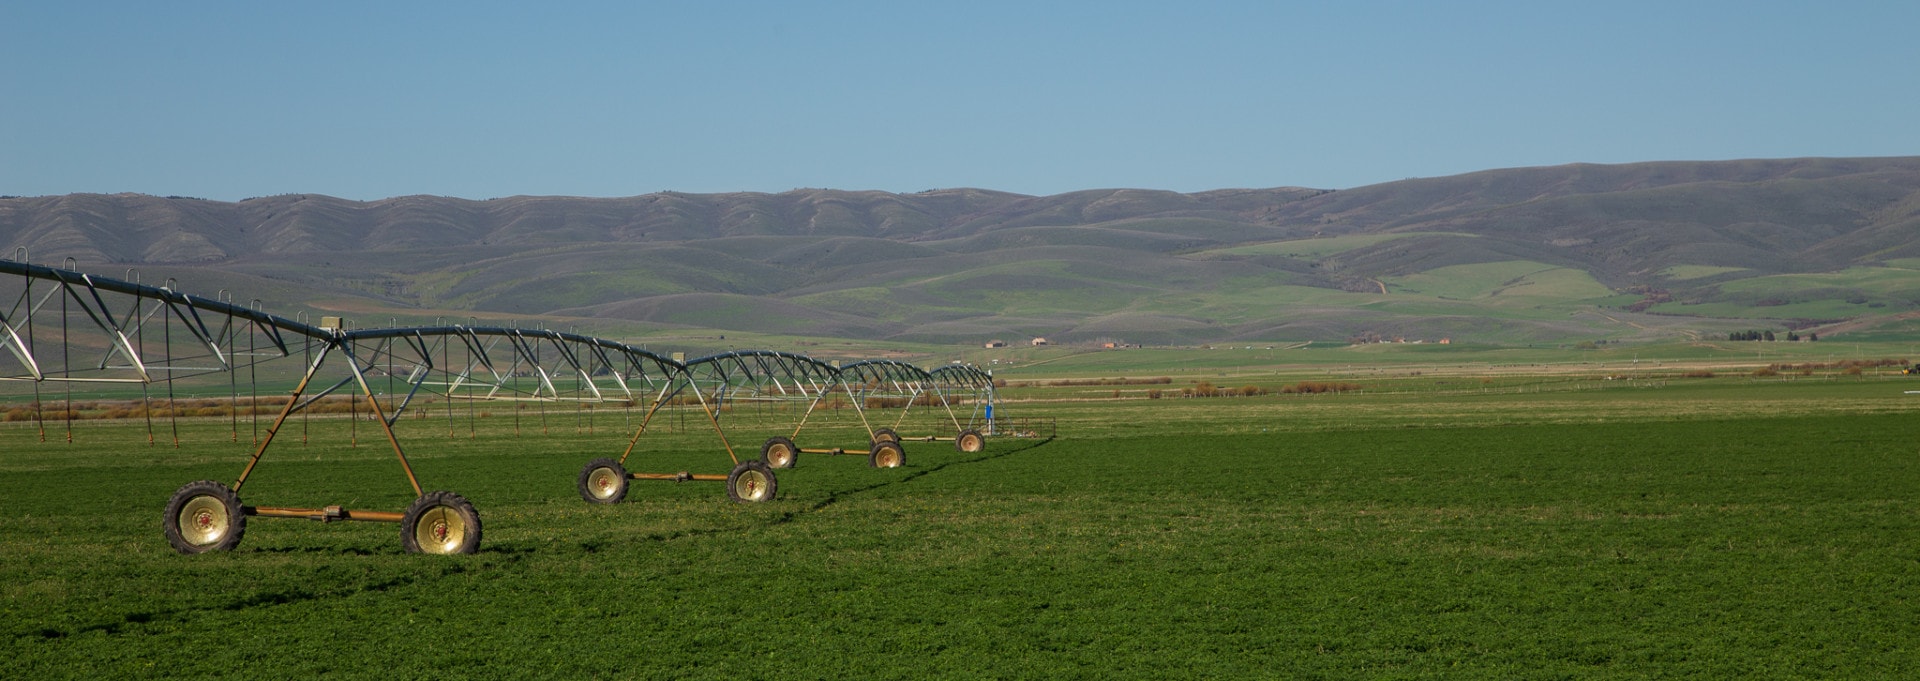 irrigation idaho shilo ranch